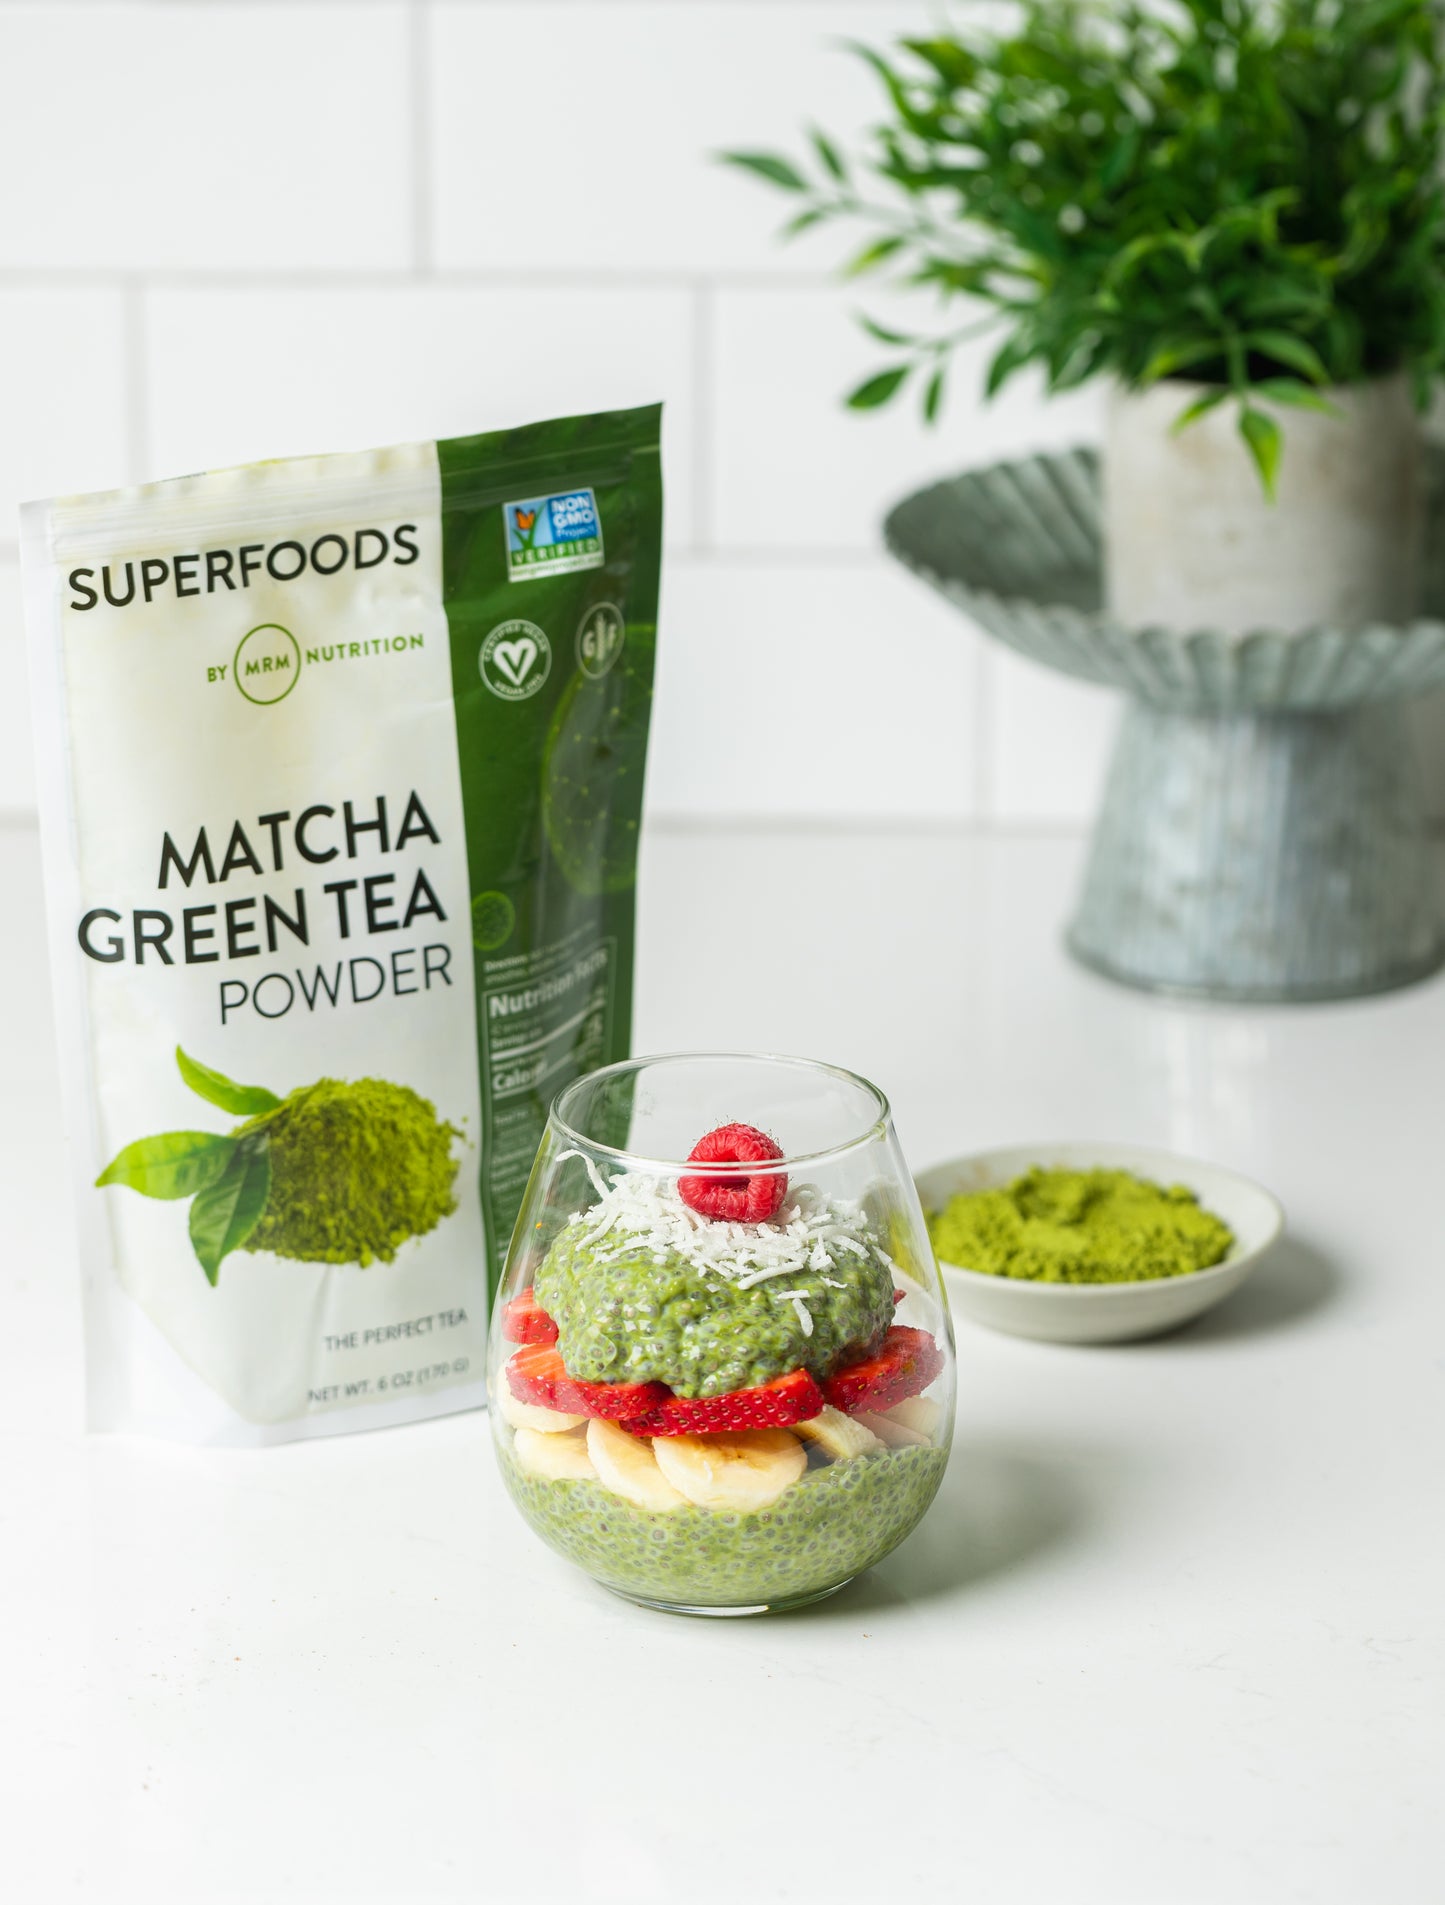 Superfoods - Matcha Green Tea Powder